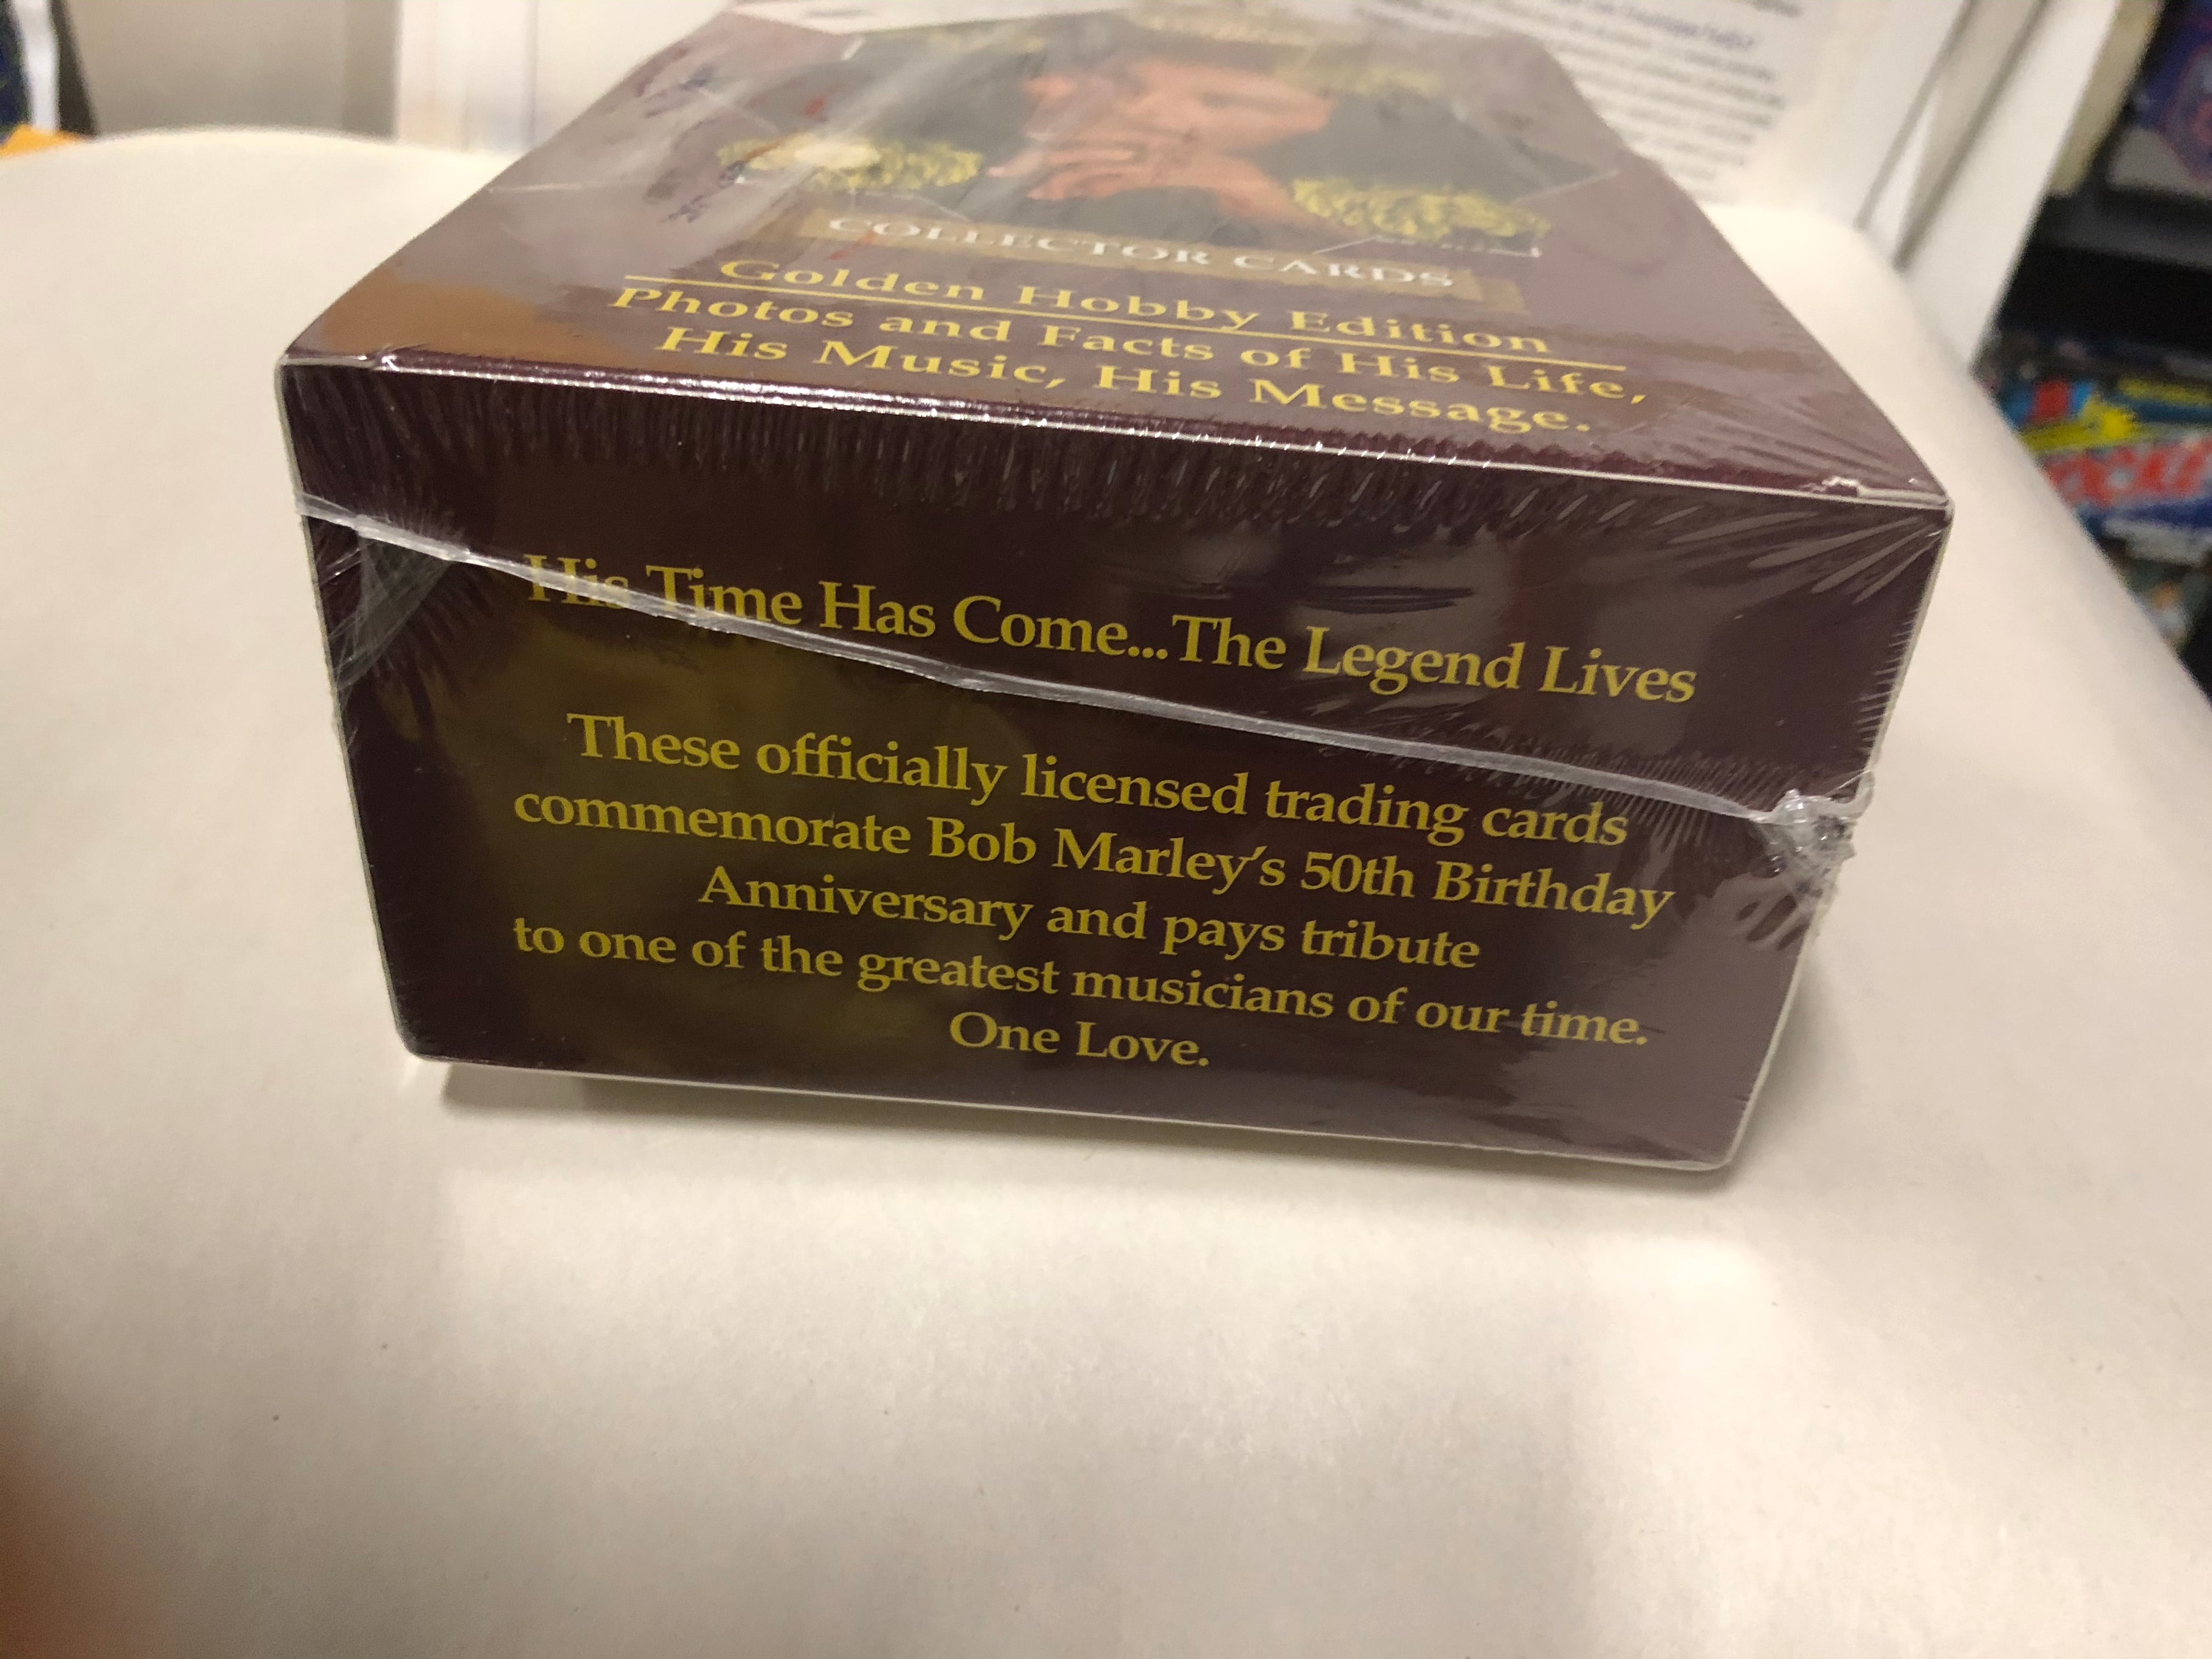 Bob Marley rare hobby cards factory sealed box with rare coin